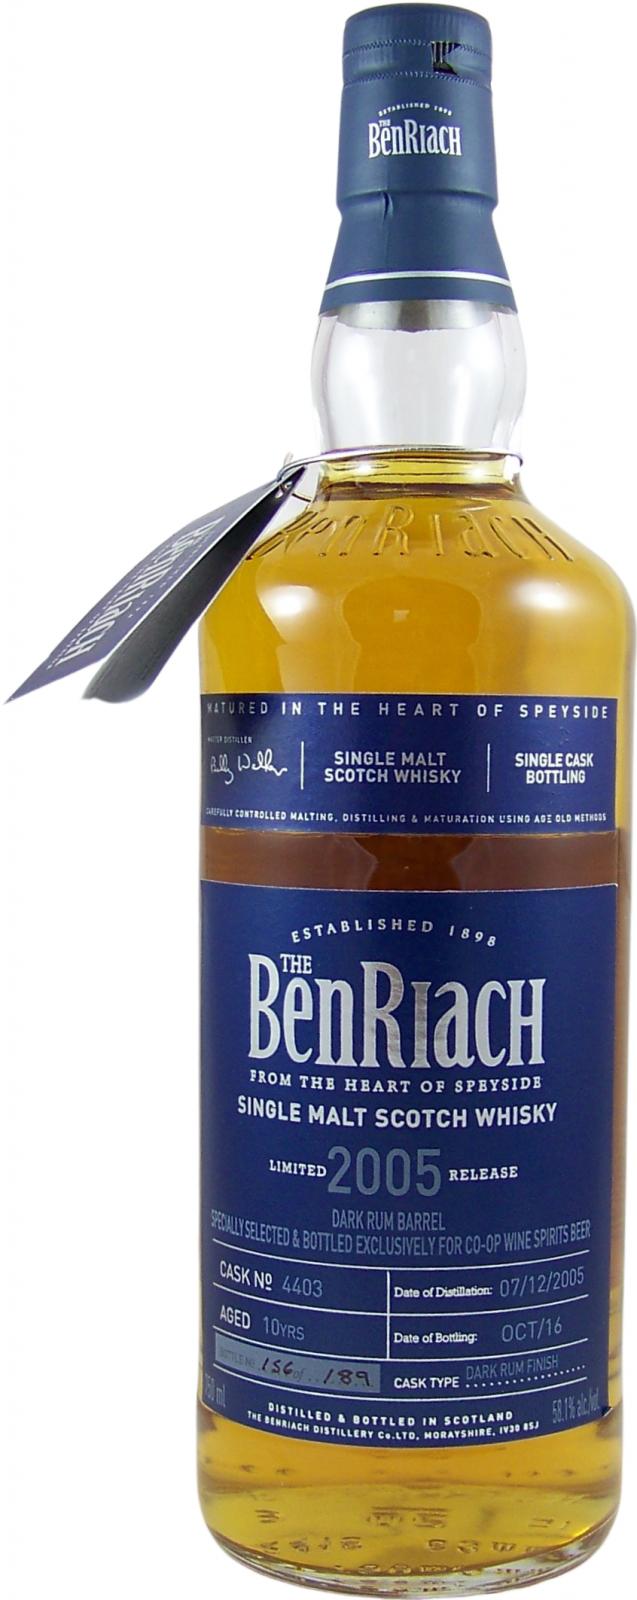 BenRiach 2005 Cask Bottling Dark Rum Finish 4403 Co-Op Wine & Spirits 58.1% 750ml